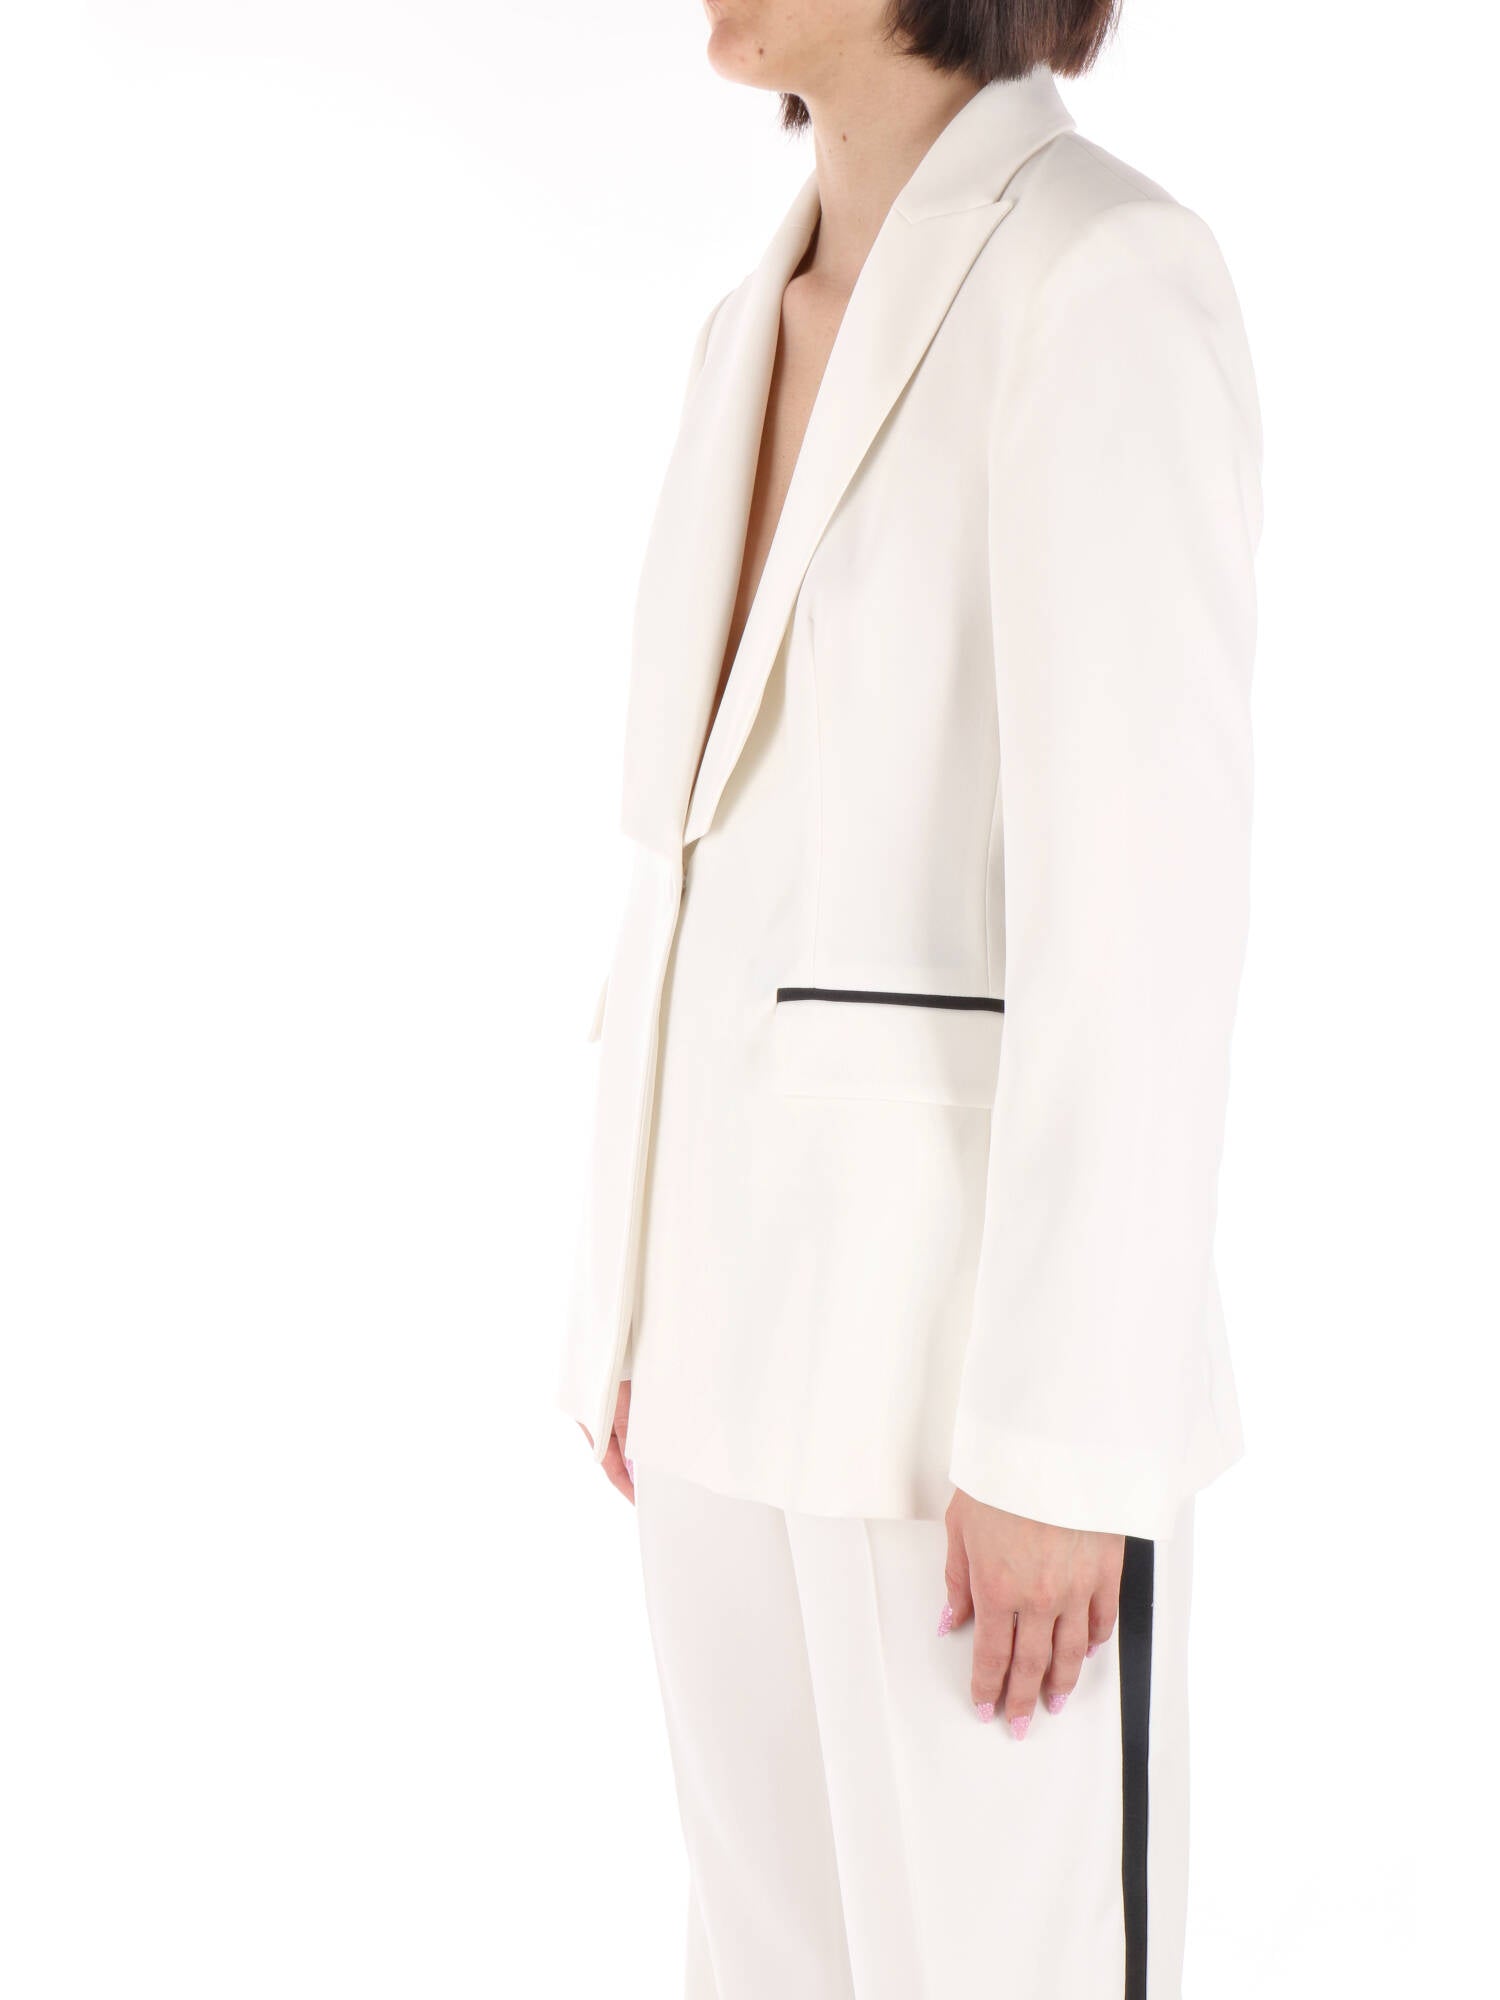 Kocca giacca elegante bianca con tasche